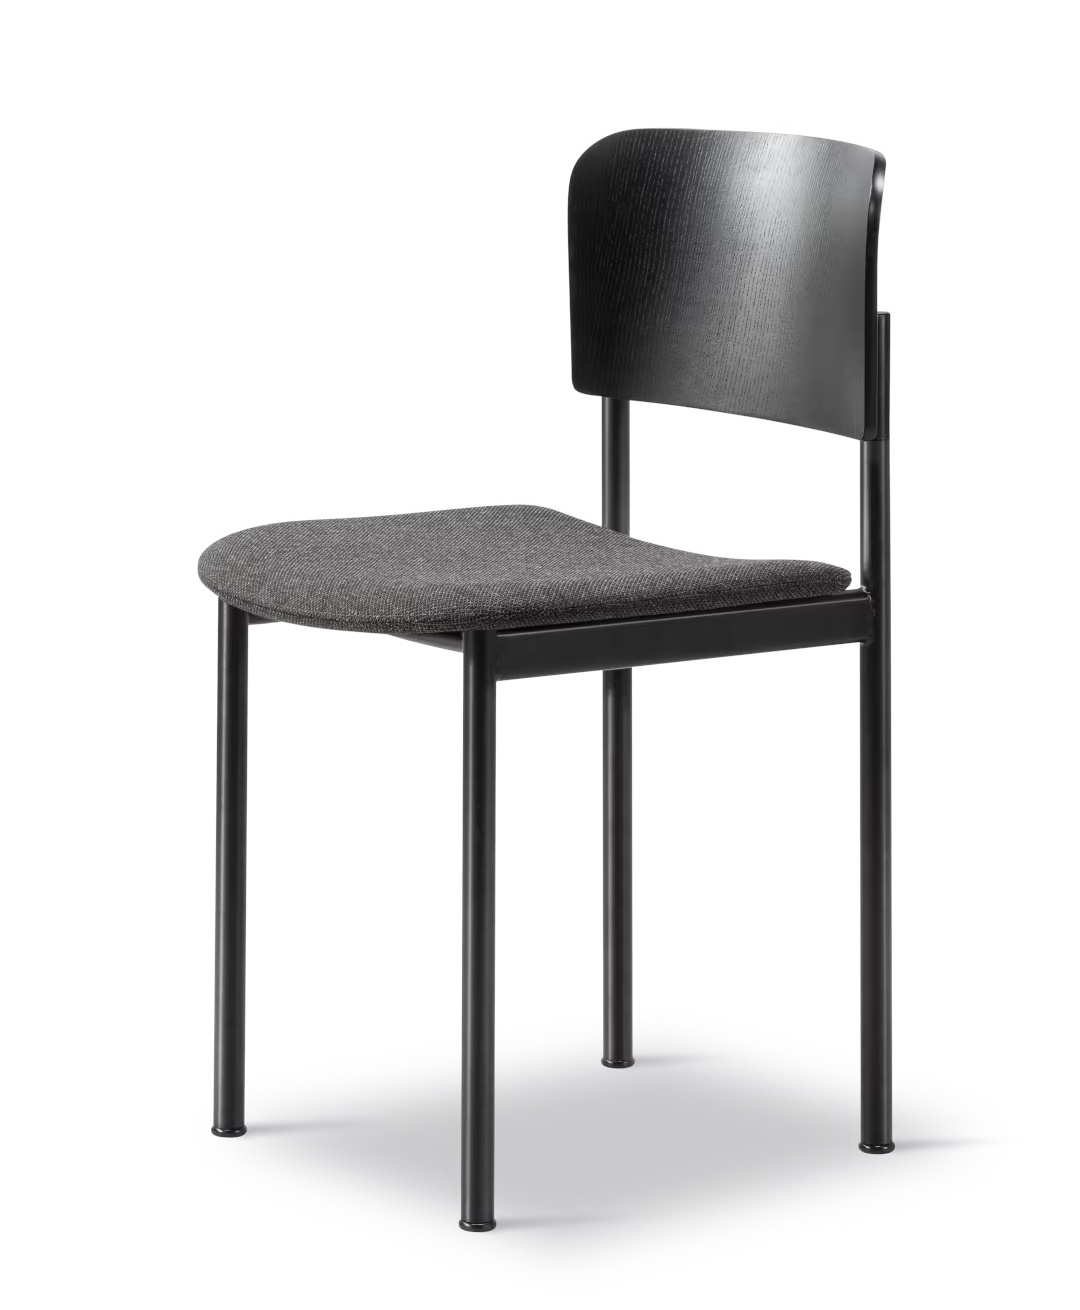 Plan Chair Sitz gepolstert, eiche lackiert / re-wool 128